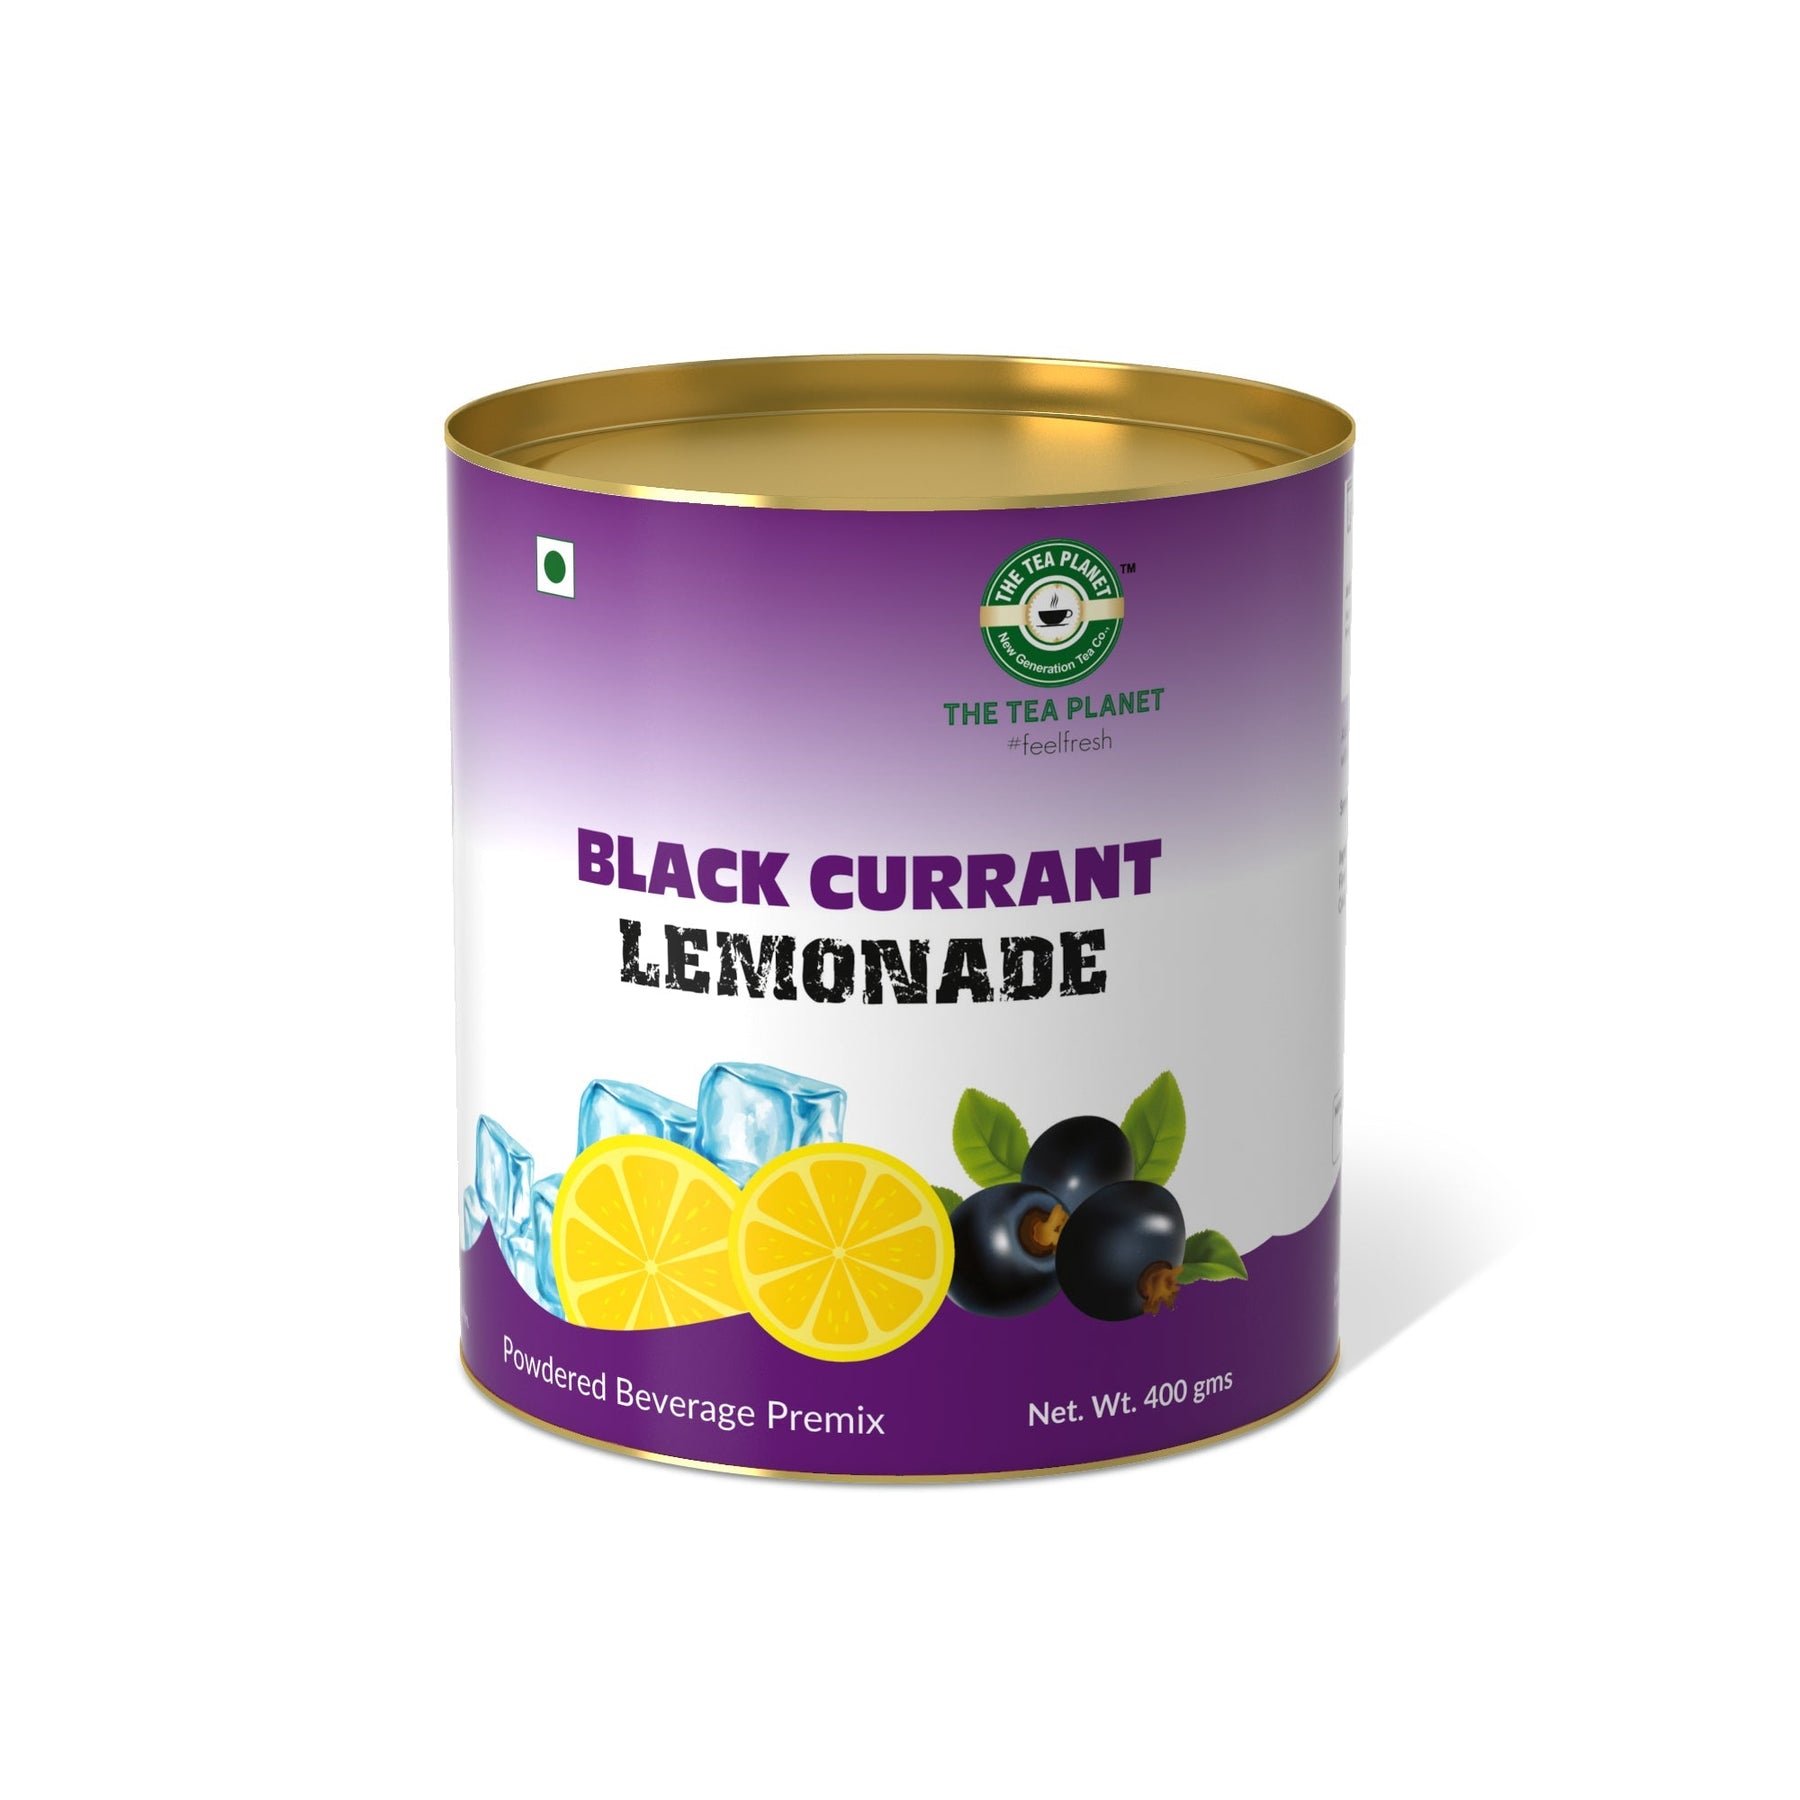 Black Currant Lemonade Premix - 800 gms